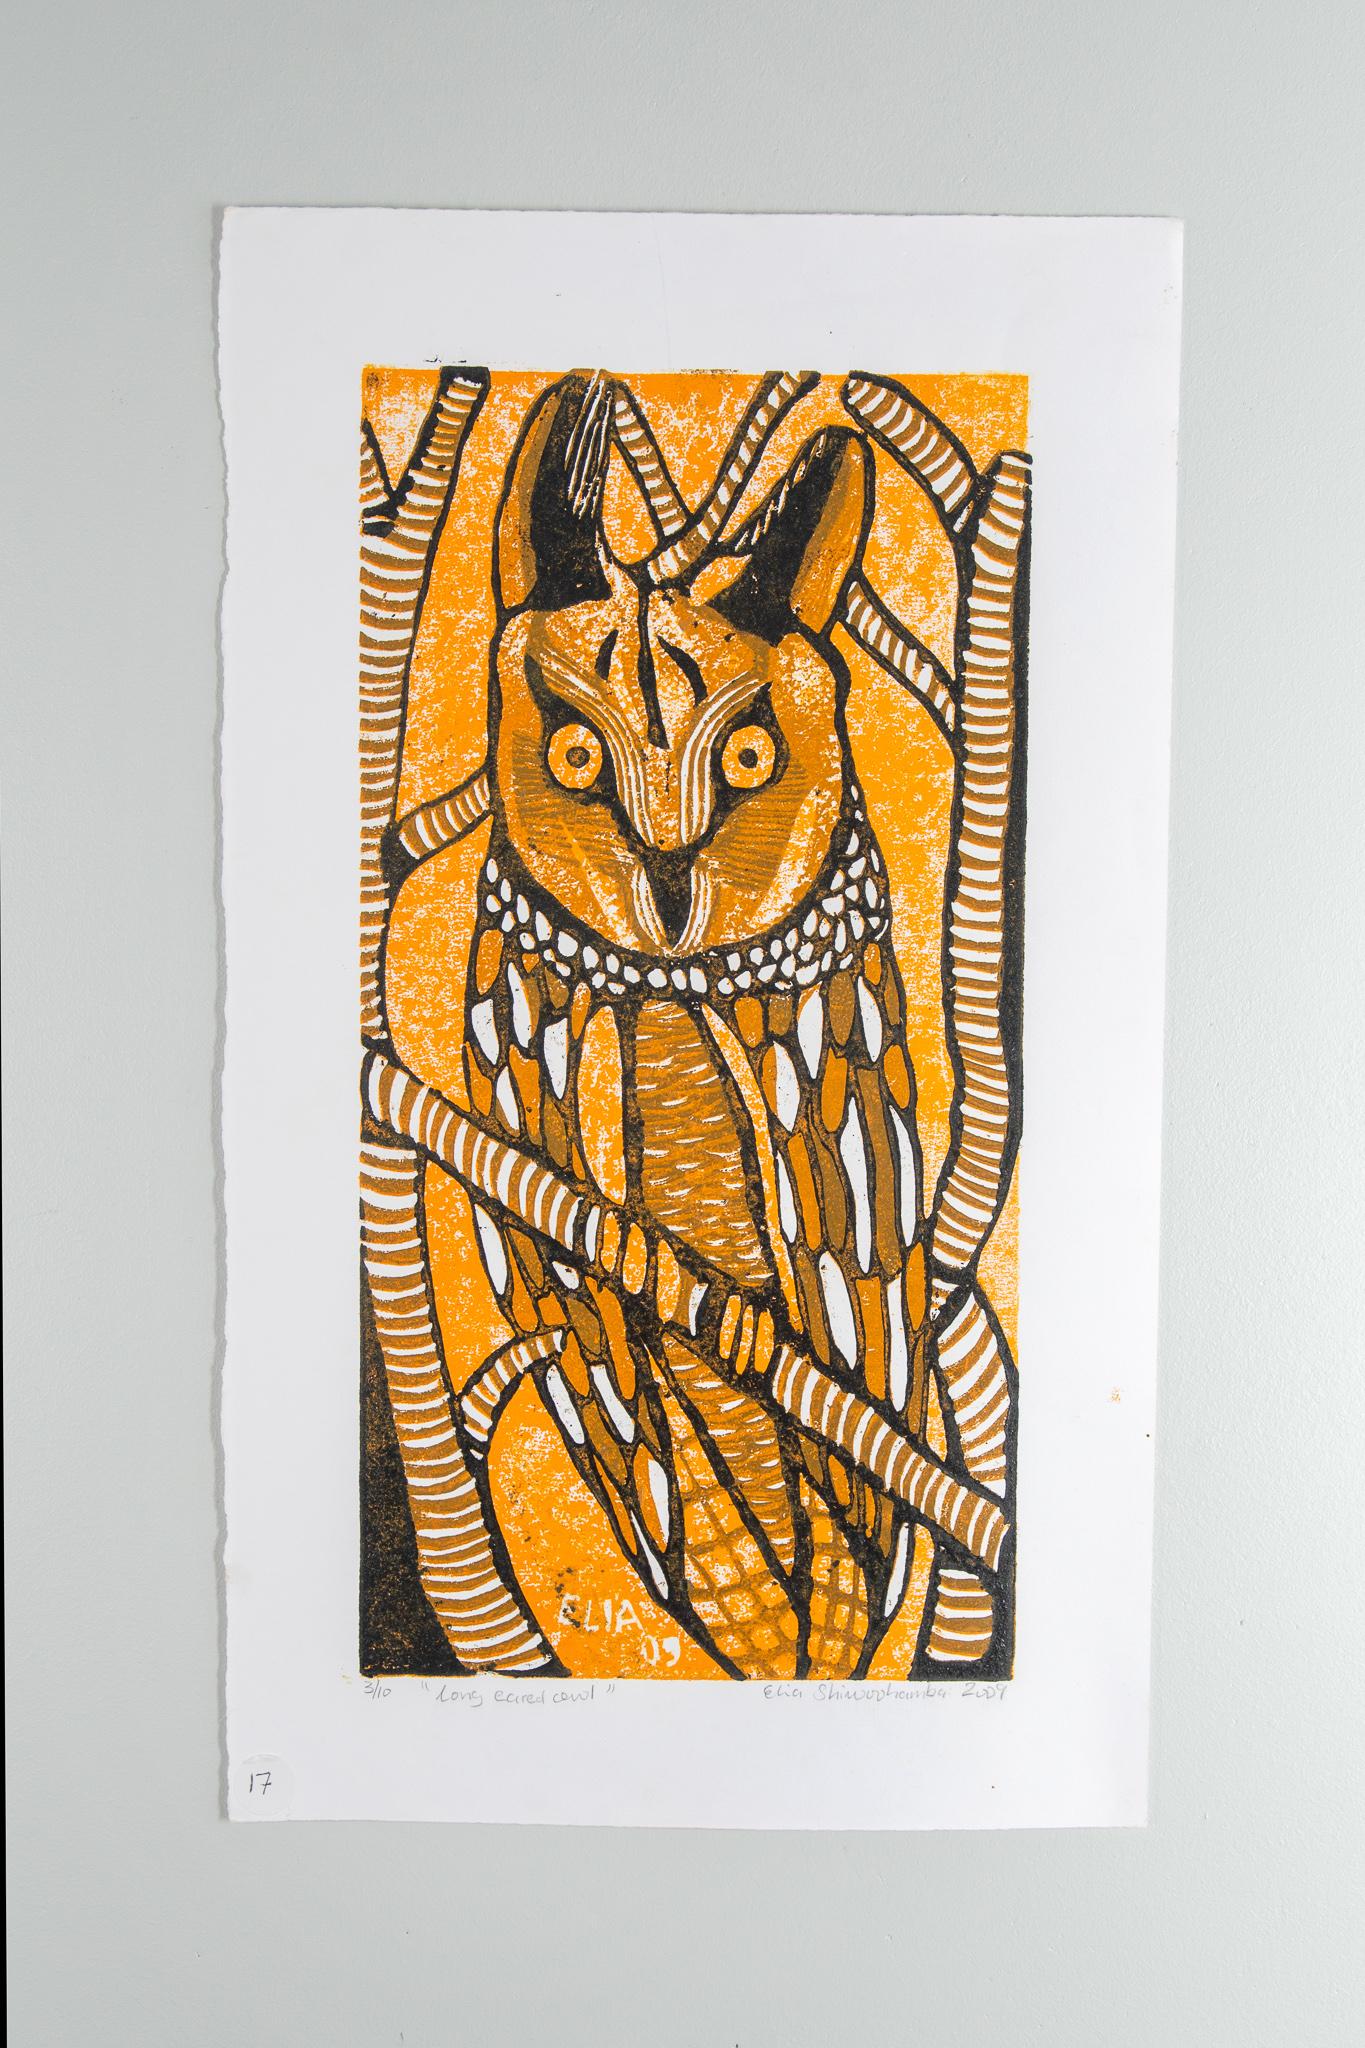 Long Eared Owl, Elia Shiwoohamba, Cardboard print on paper